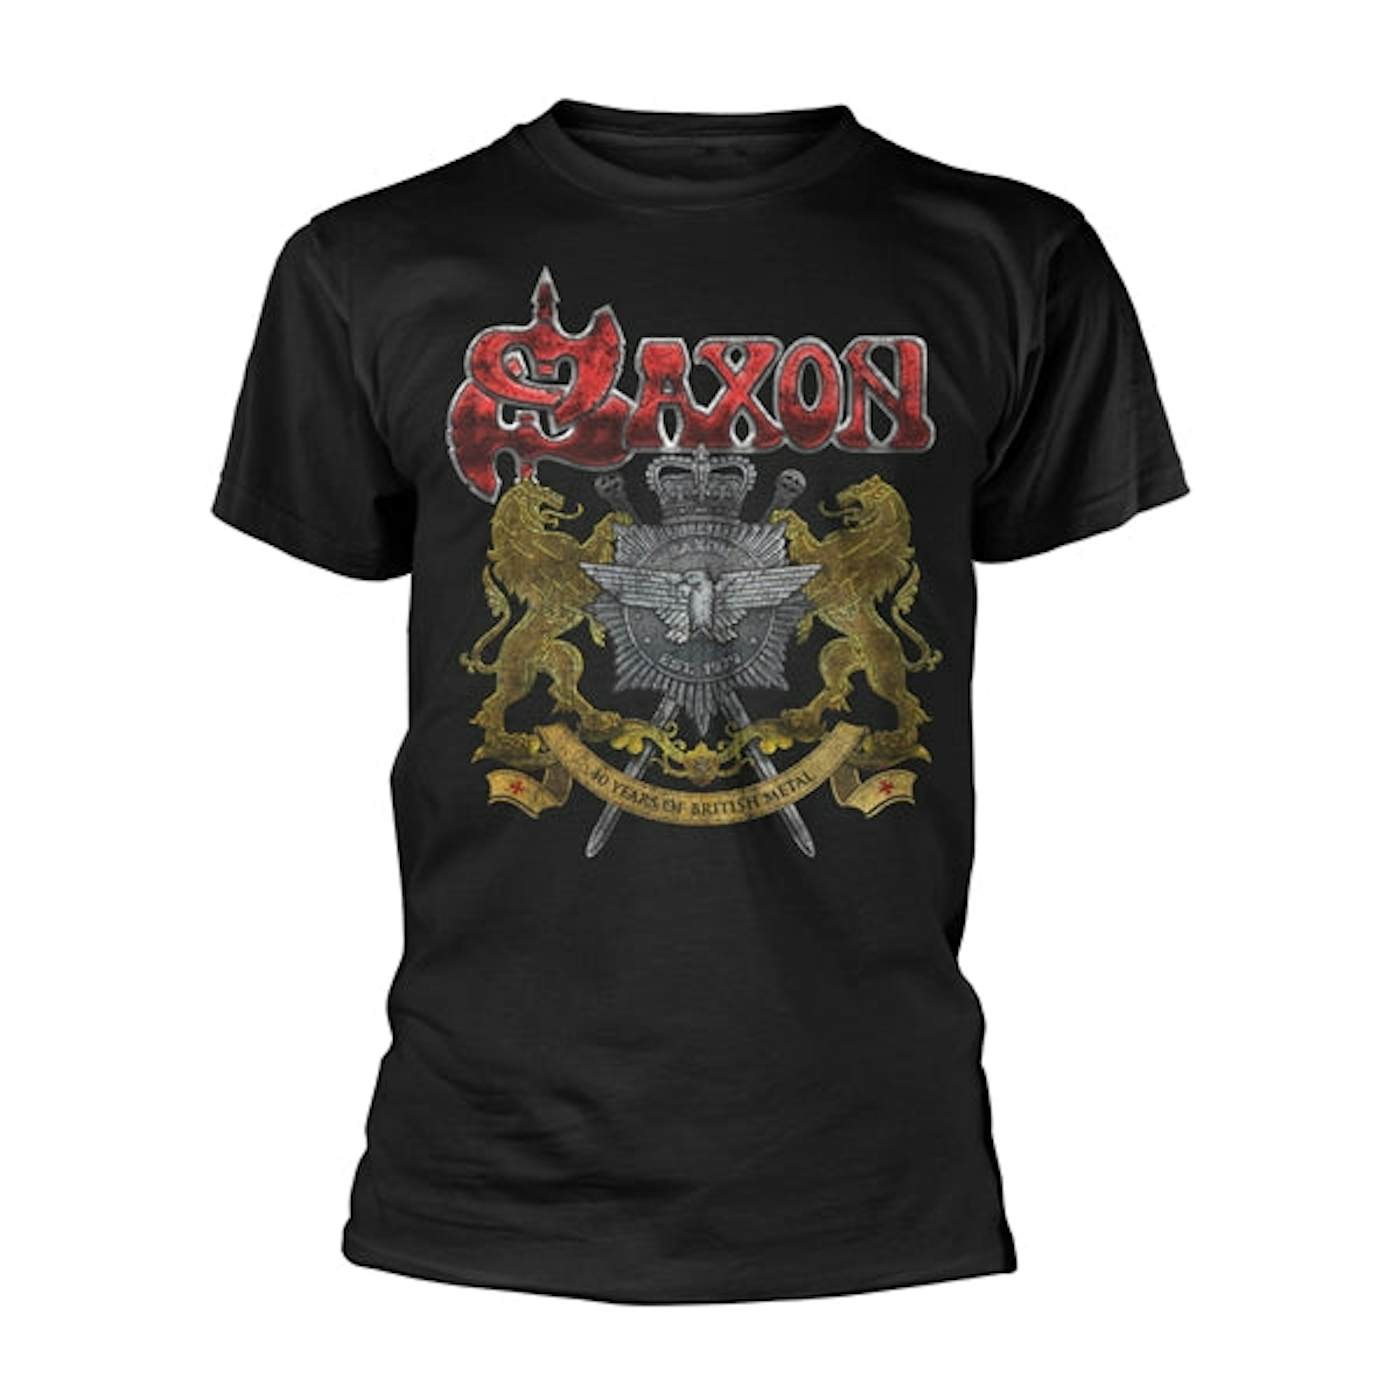 Saxon T-Shirt - 40 Years